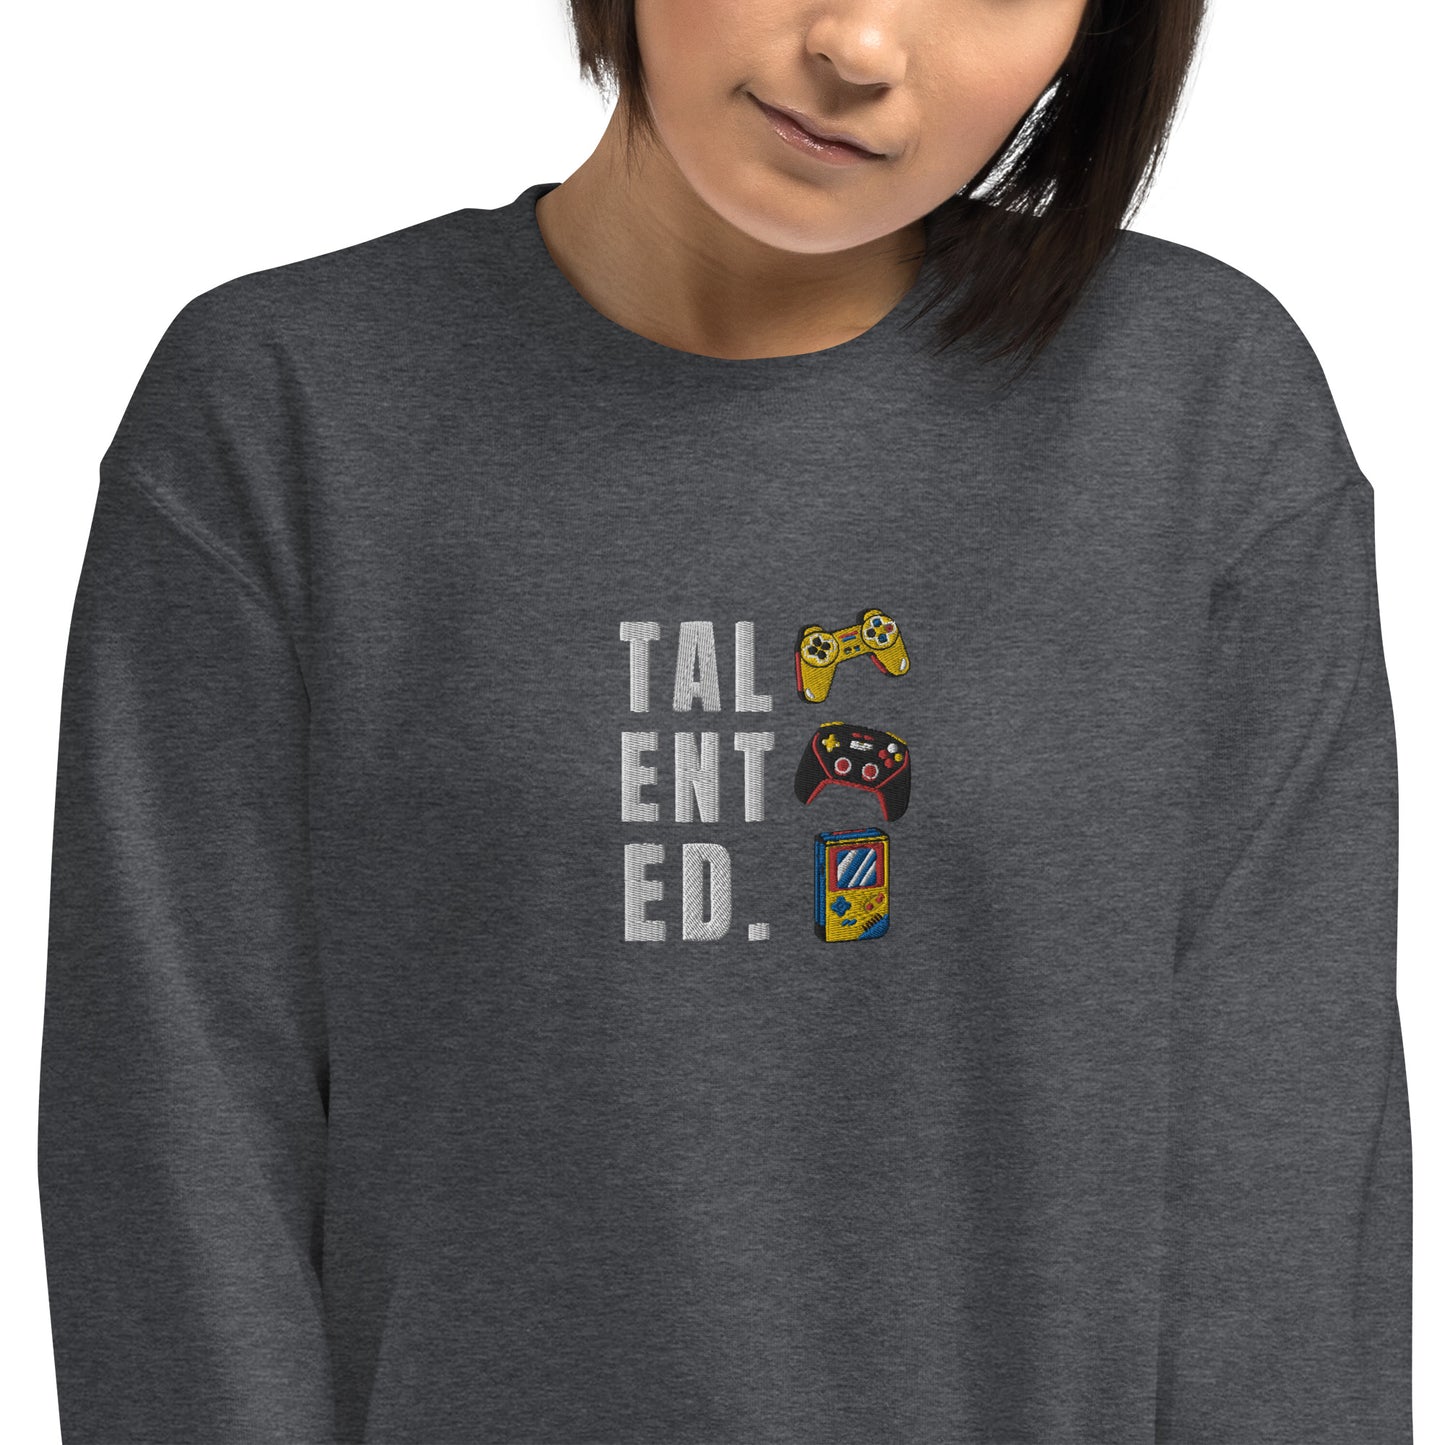 Talented - Unisex Sweatshirt